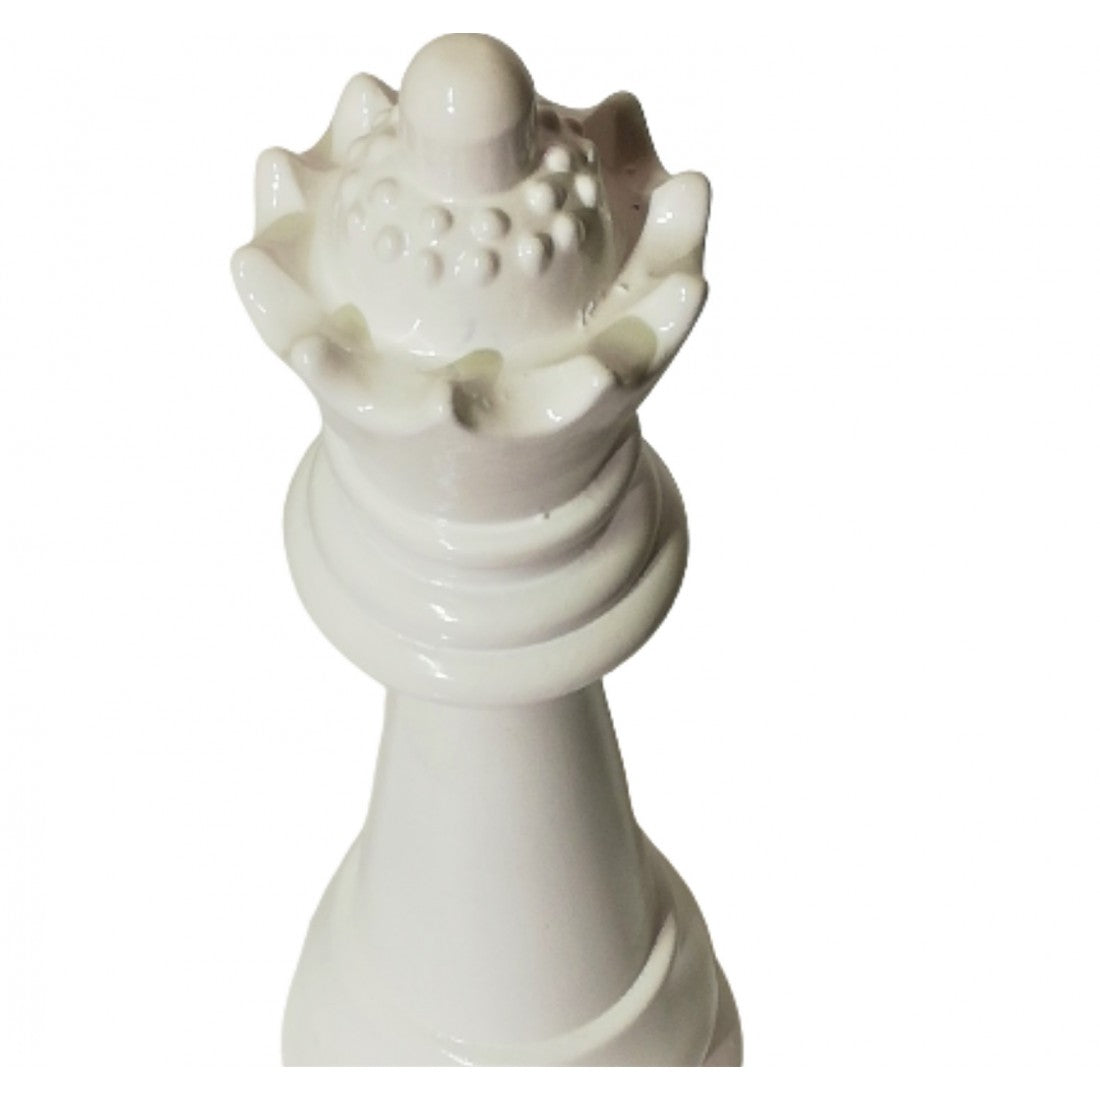 King Decor 42cm Chess Base White